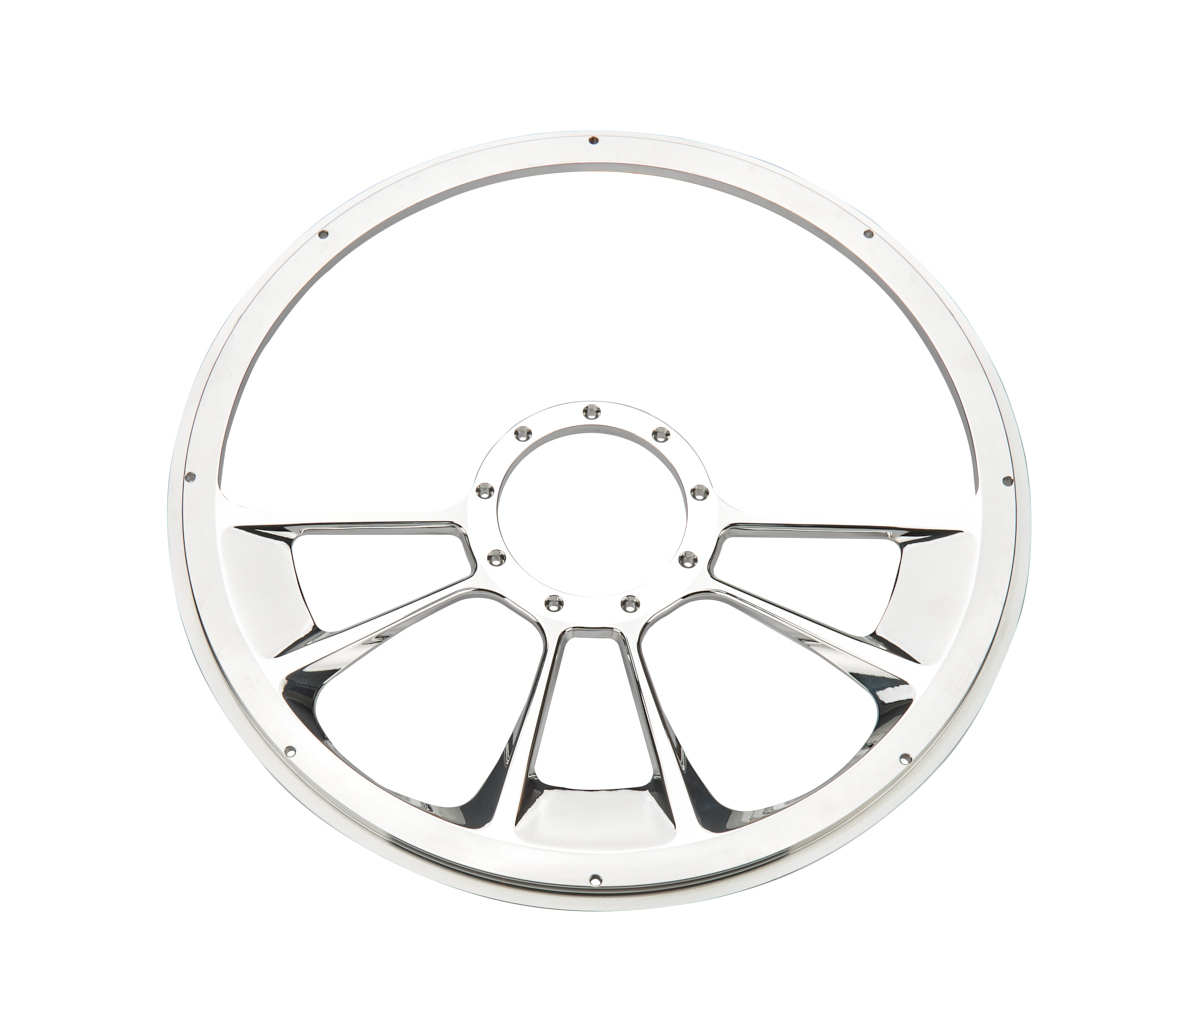 Billet Specialities 34169 Steering Wheel, Grinder, 15-1/2 in Diameter, 2 in Dish, 3-Spoke, Milled Finger Notches, Billet Aluminum, Polished, Each